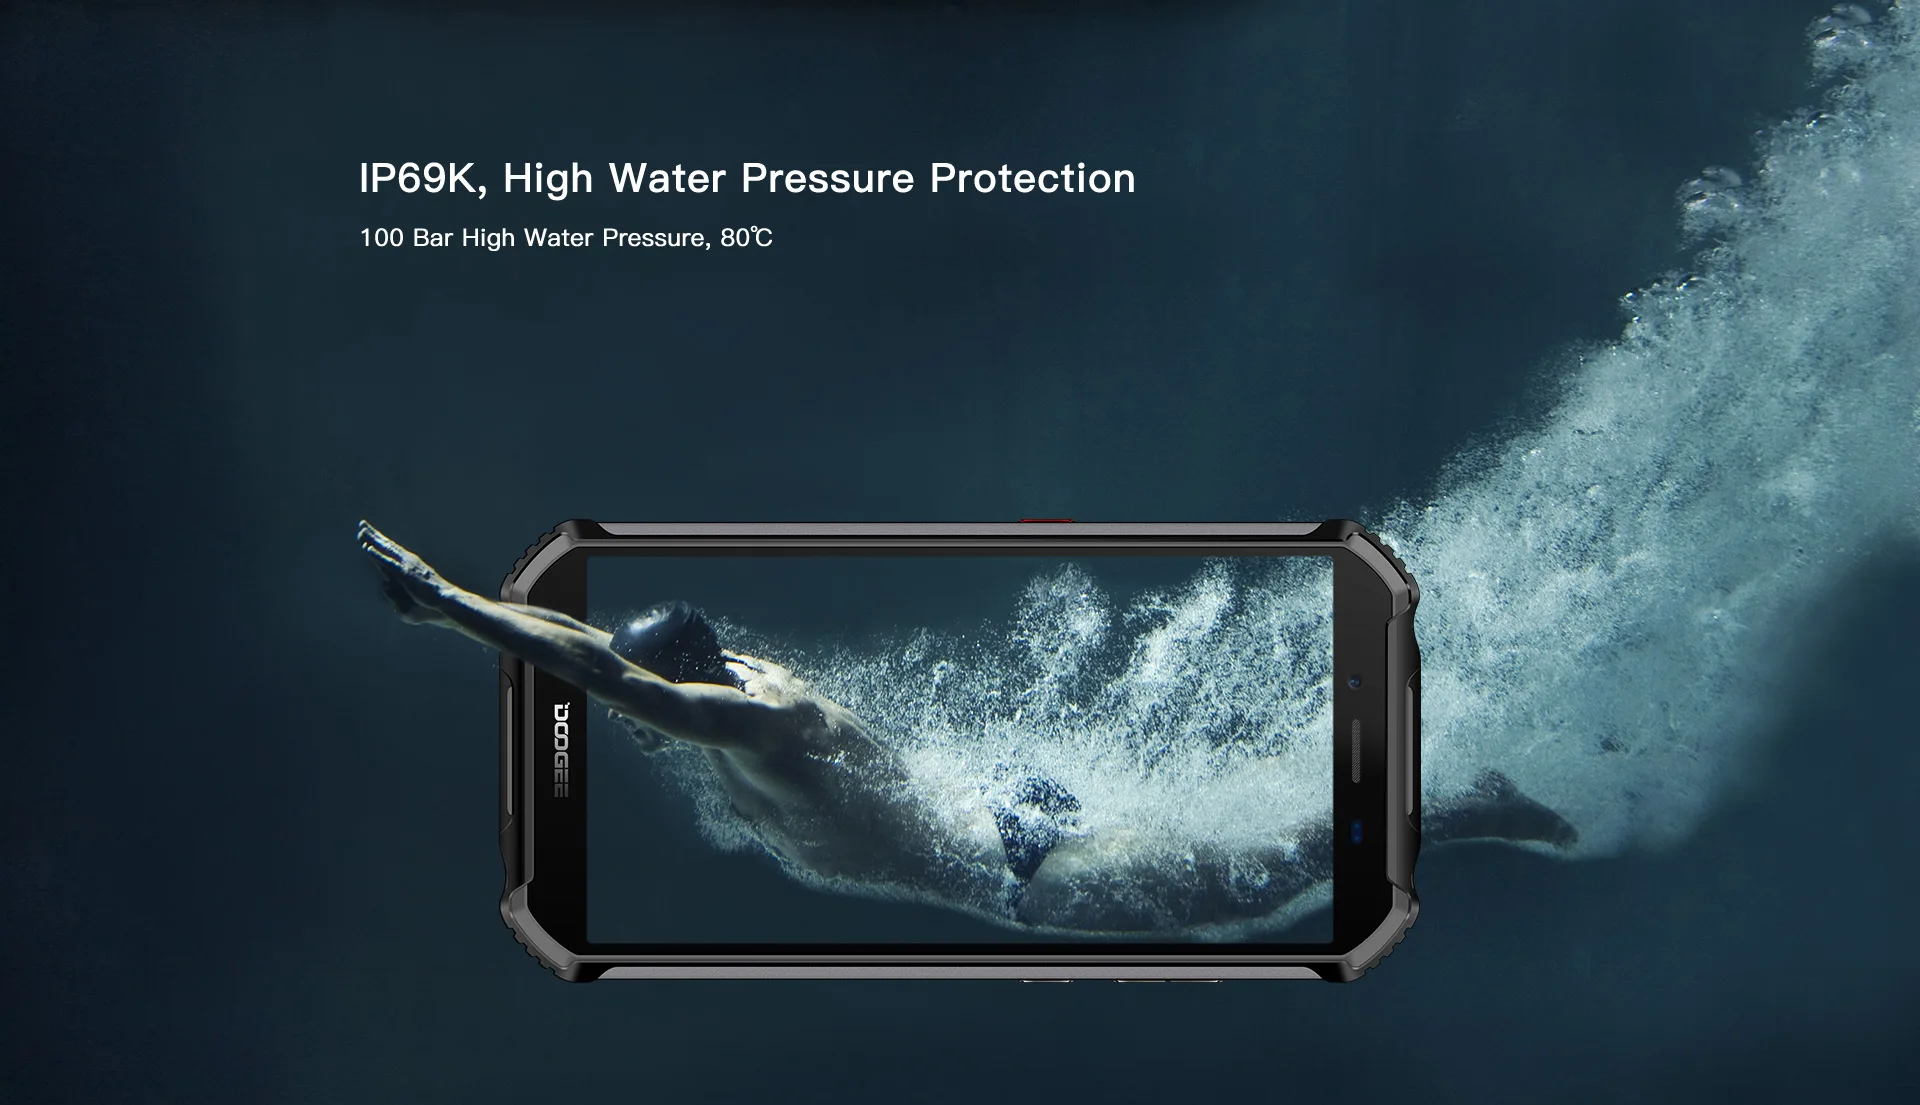 Doogee S40 Android 9,0 Pie сотовый телефон IP68 IP69K водонепроницаемый 5," 4650 мАч распознавание лица отпечаток пальца разблокировка 4G LTE NFC Смартфон